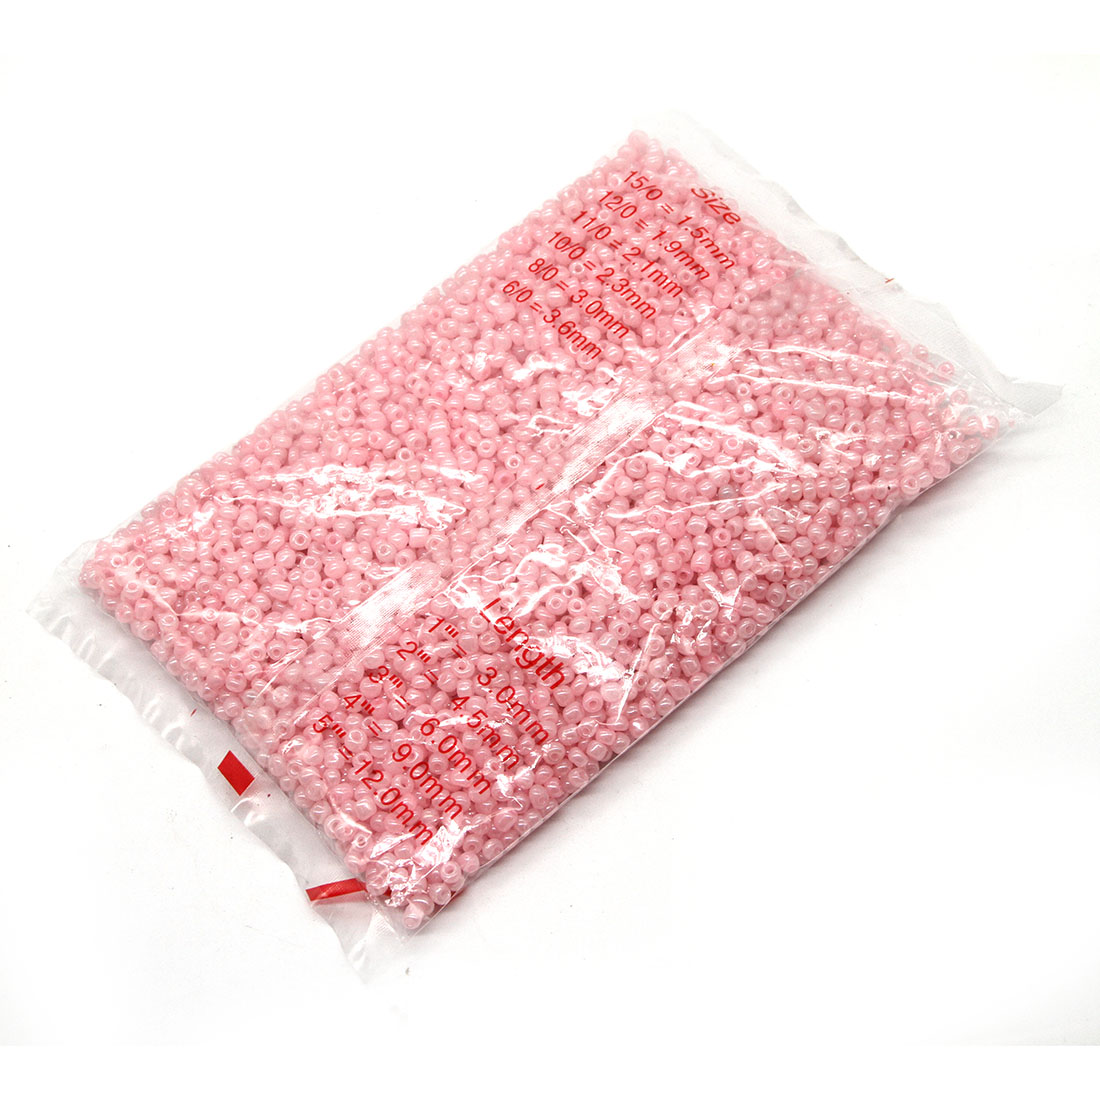 Korean powder 2mm 30,000 packs